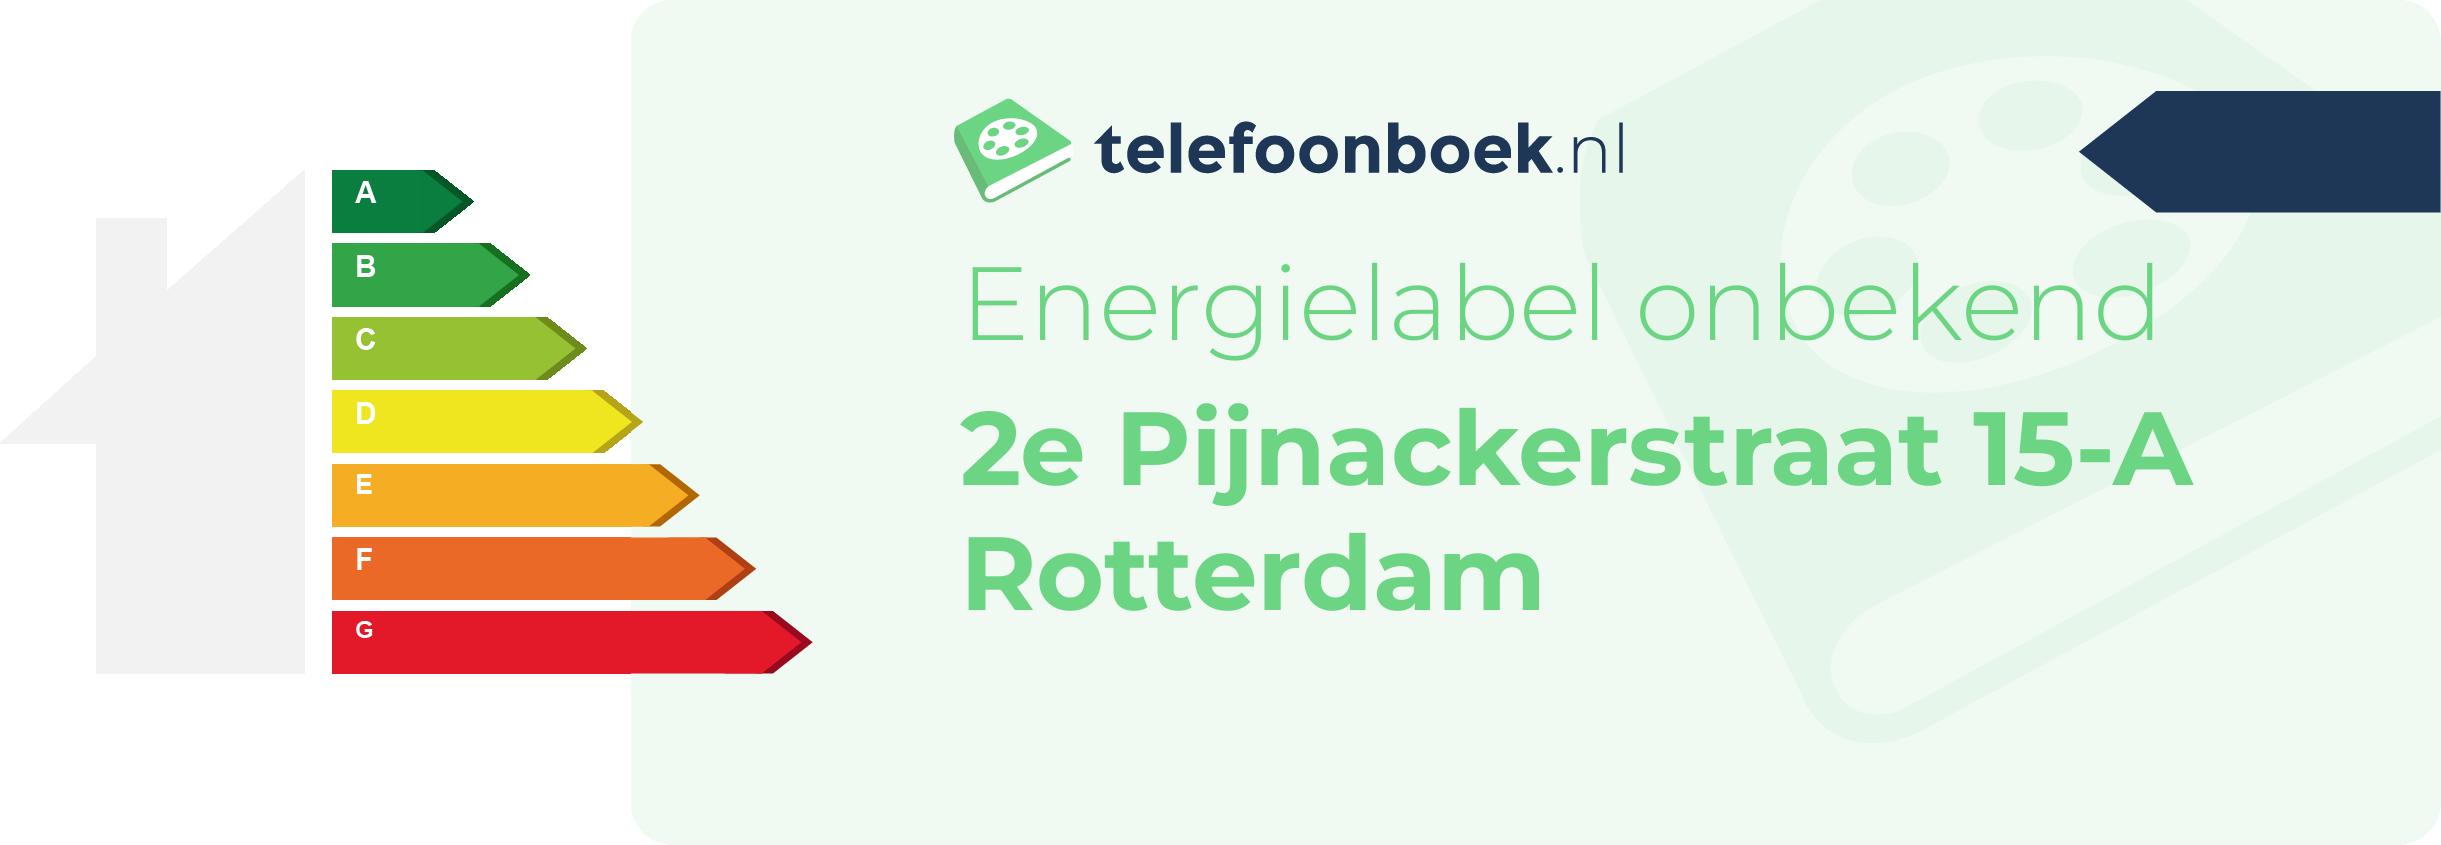 Energielabel 2e Pijnackerstraat 15-A Rotterdam